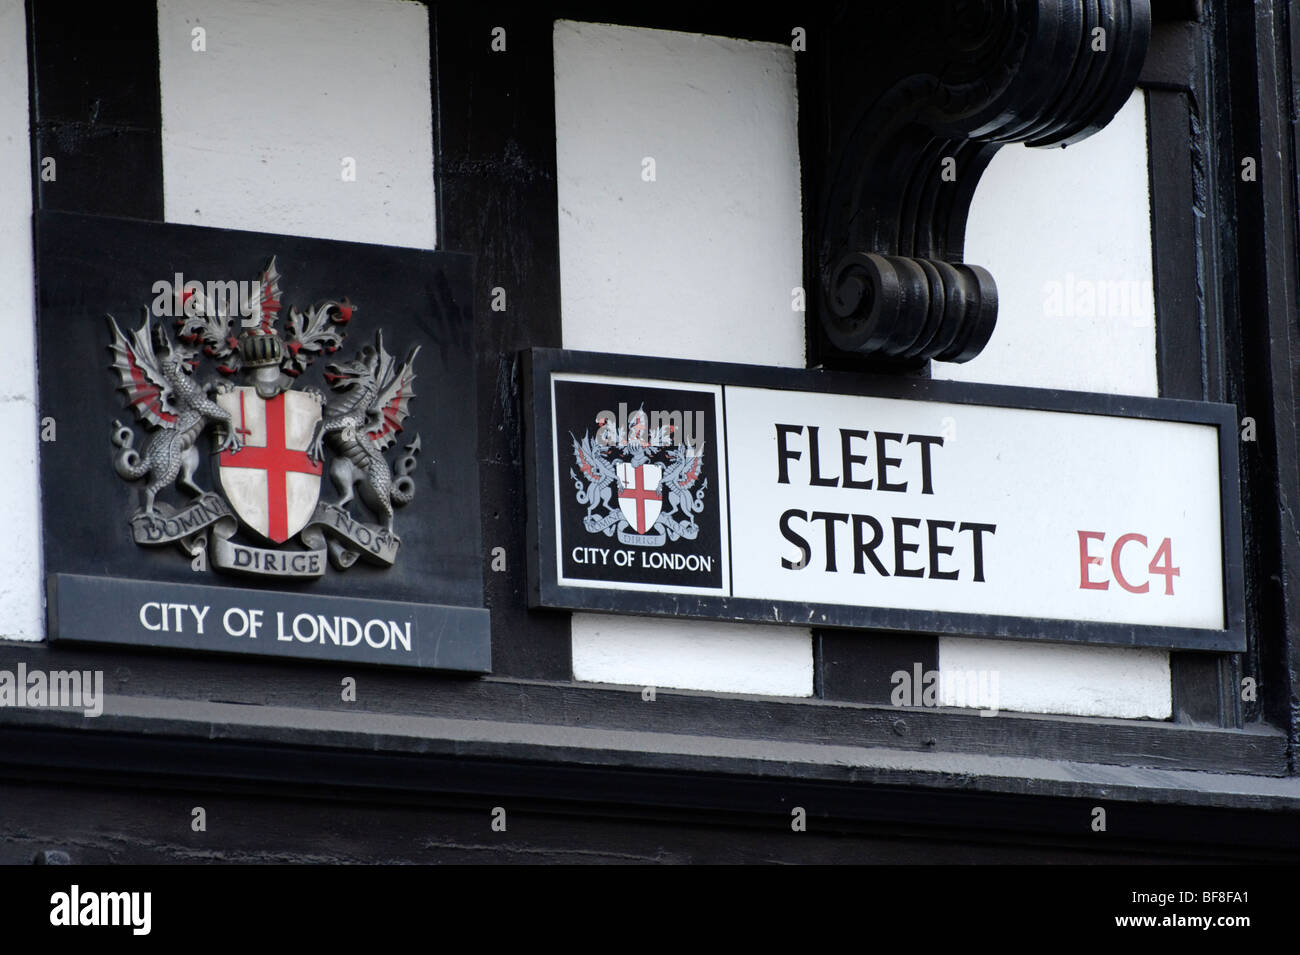 FLEET STREET METAL SIGN LONDON STREET Novelty Retro Wall Plaque 